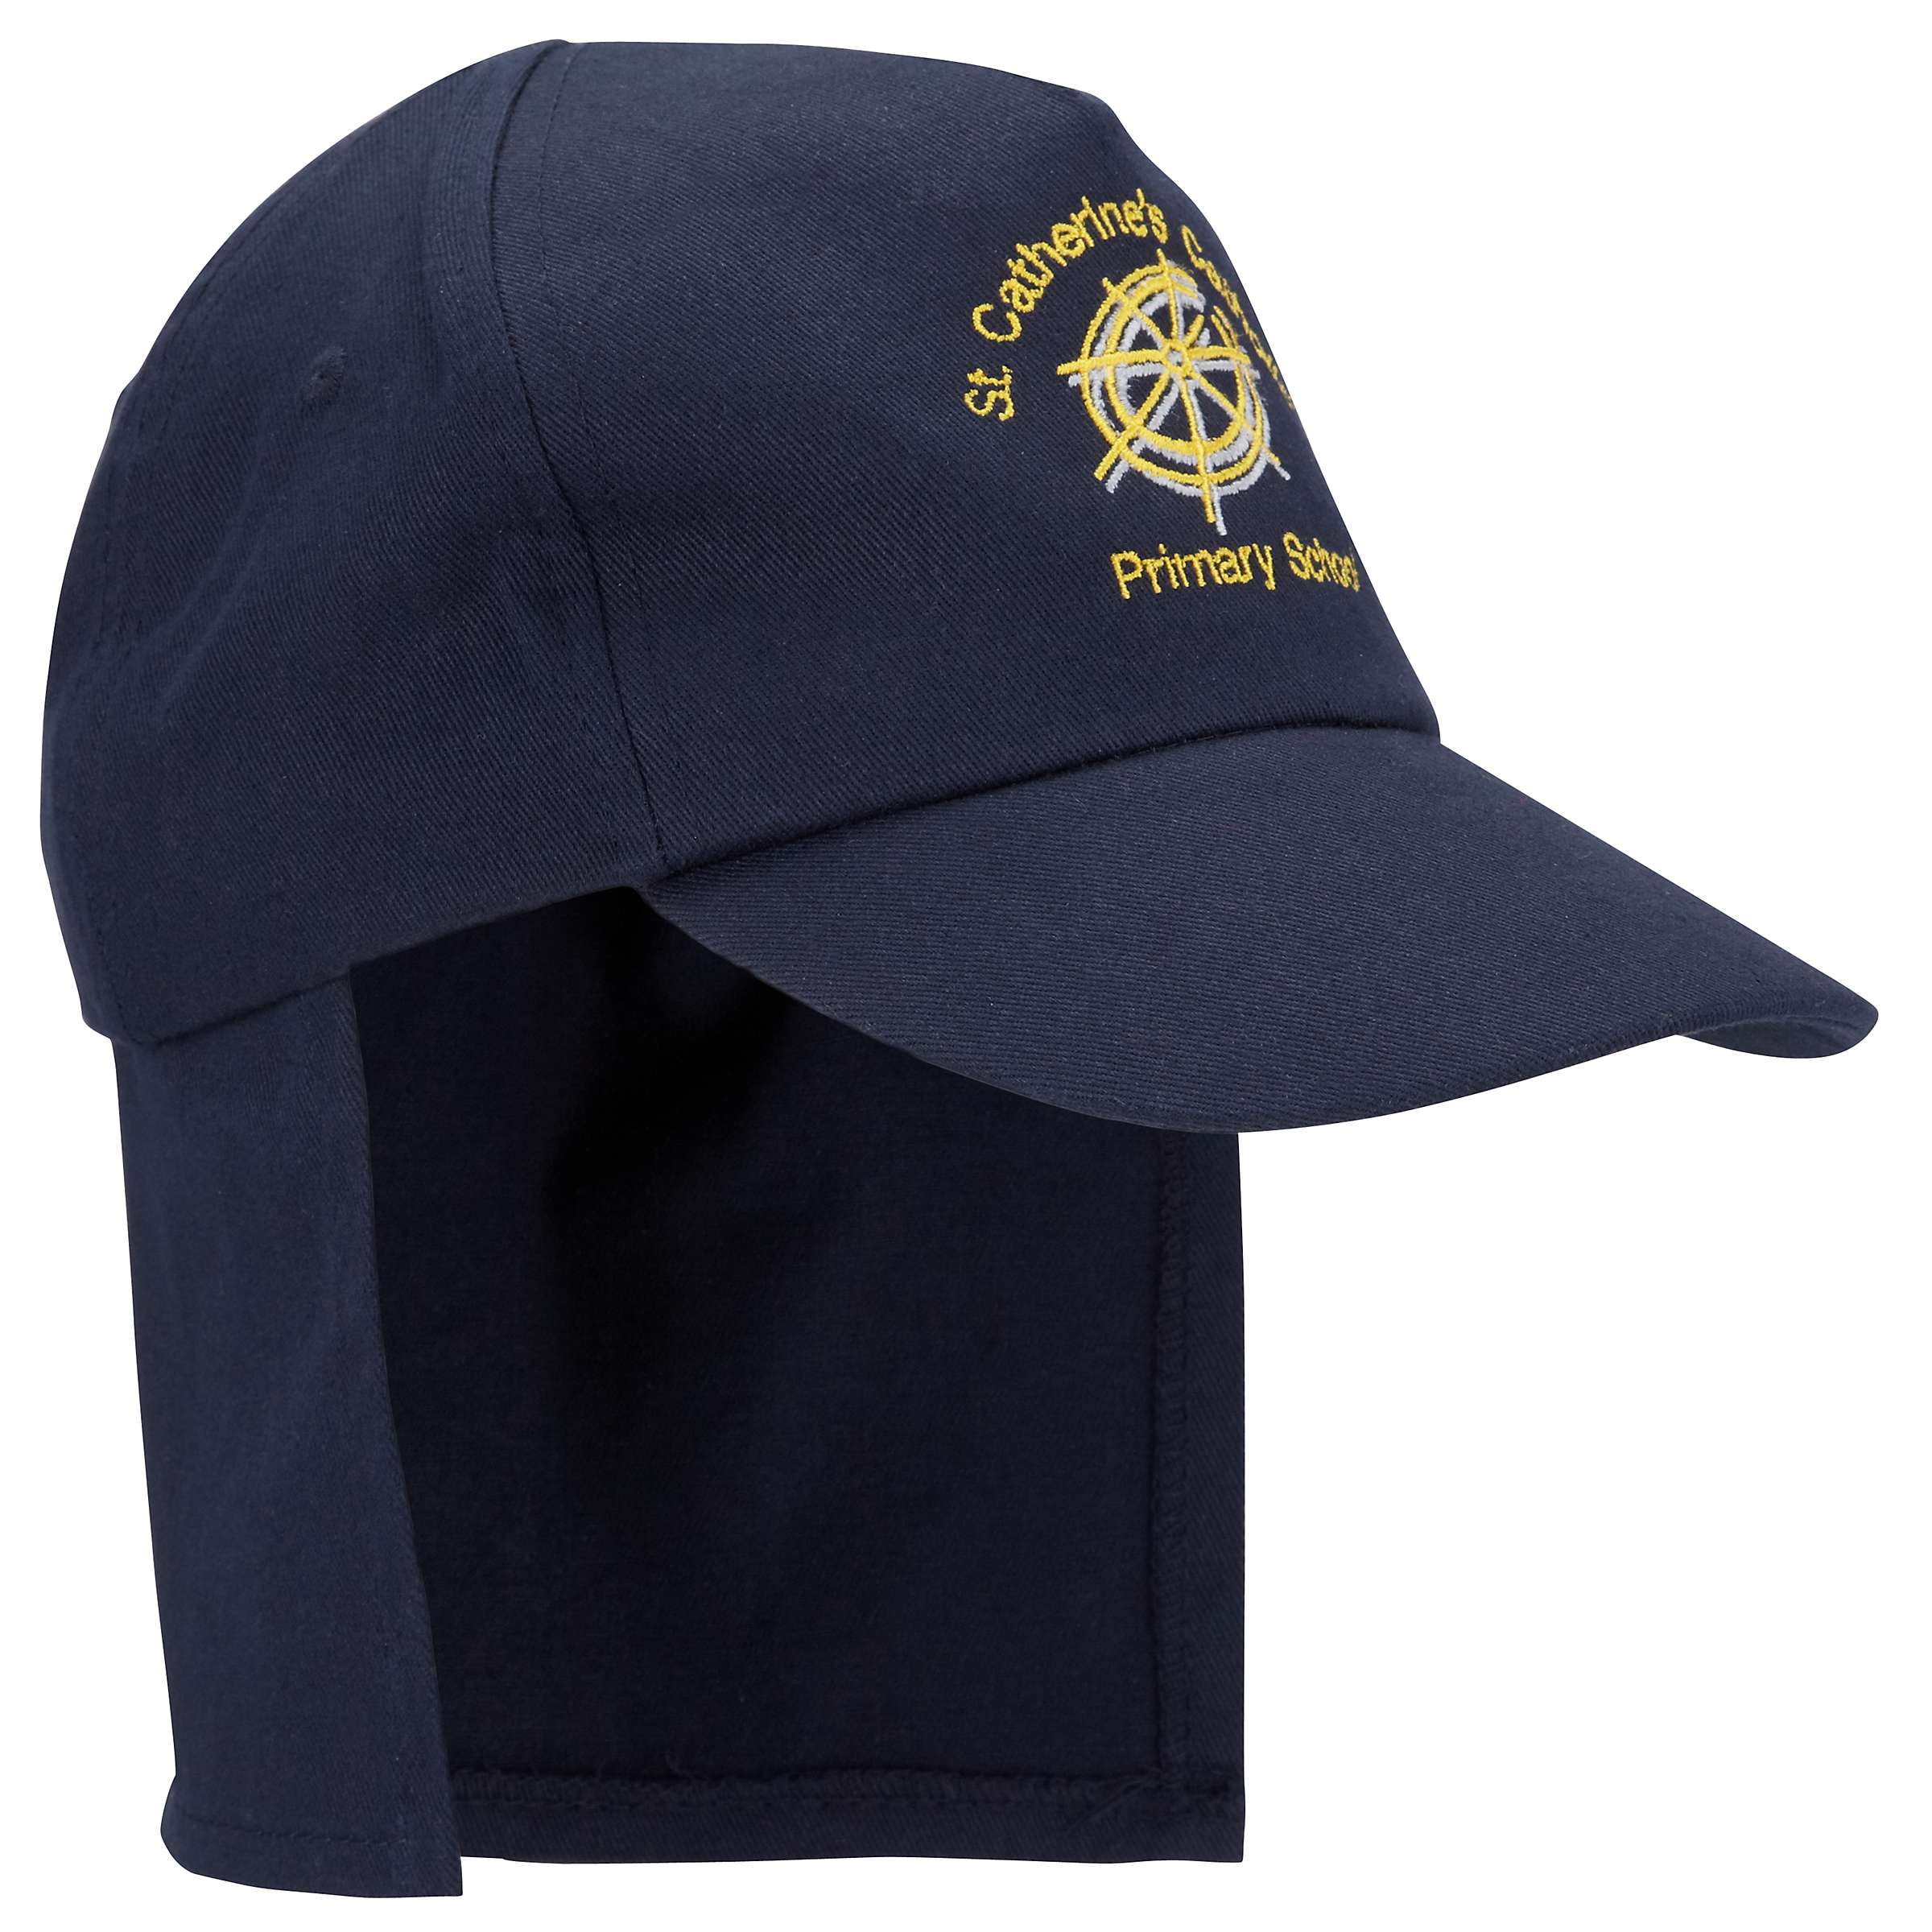 Buy St Catherine's Catholic Primary School KS1 Legionnaire's Cap, Navy Online at johnlewis.com